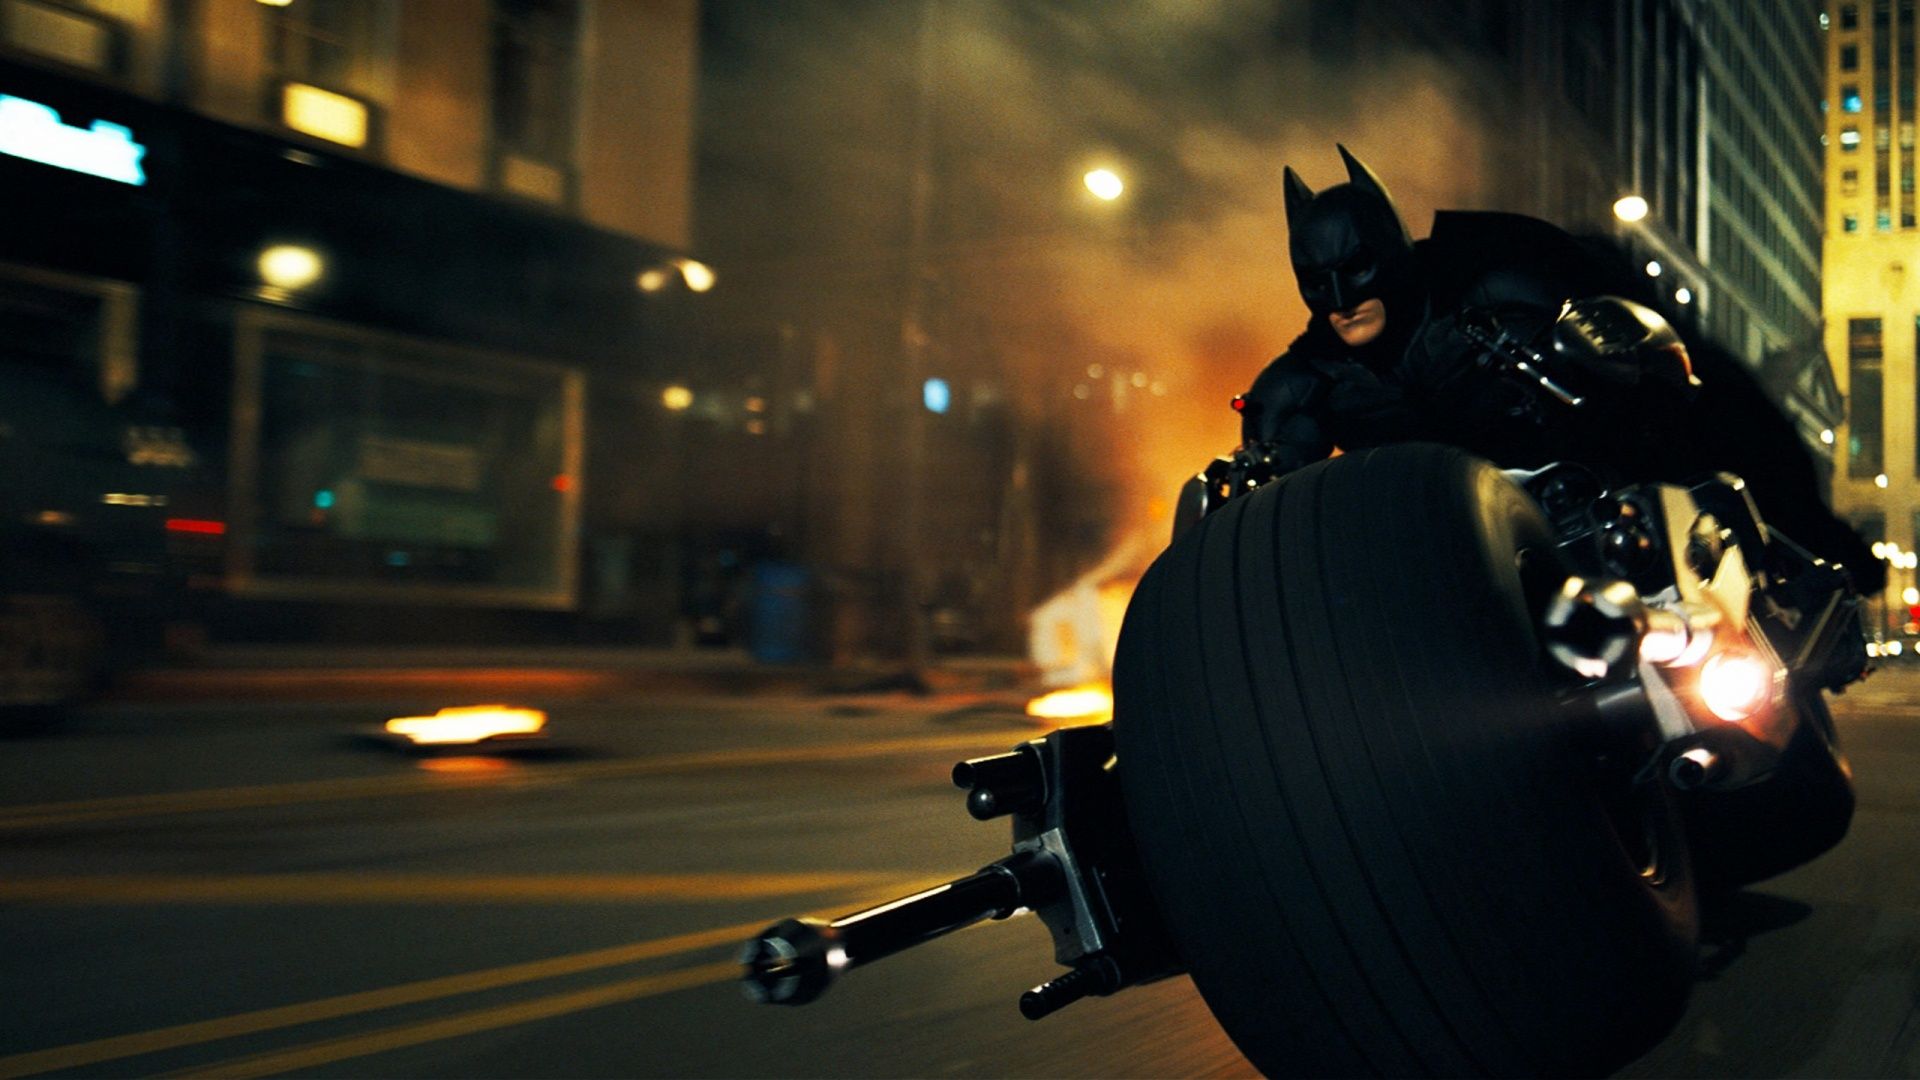 Batman in Dark Knight Rises Wallpapers | HD Wallpapers